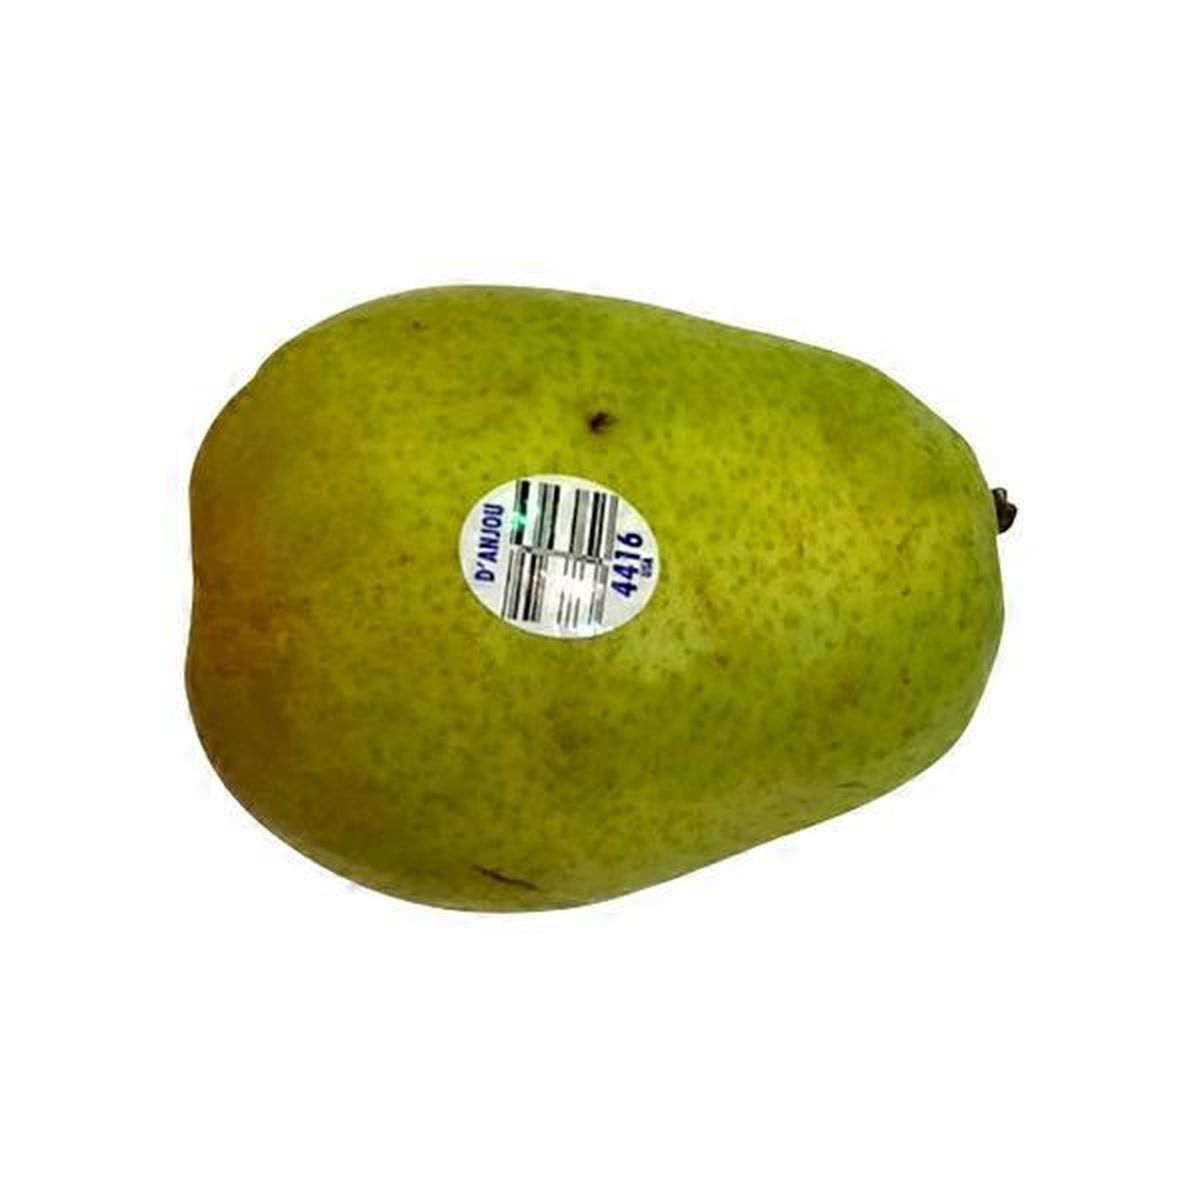 Organic Danjou Pears 3 Lb Bag Delivery Or Pickup Near Me Instacart 